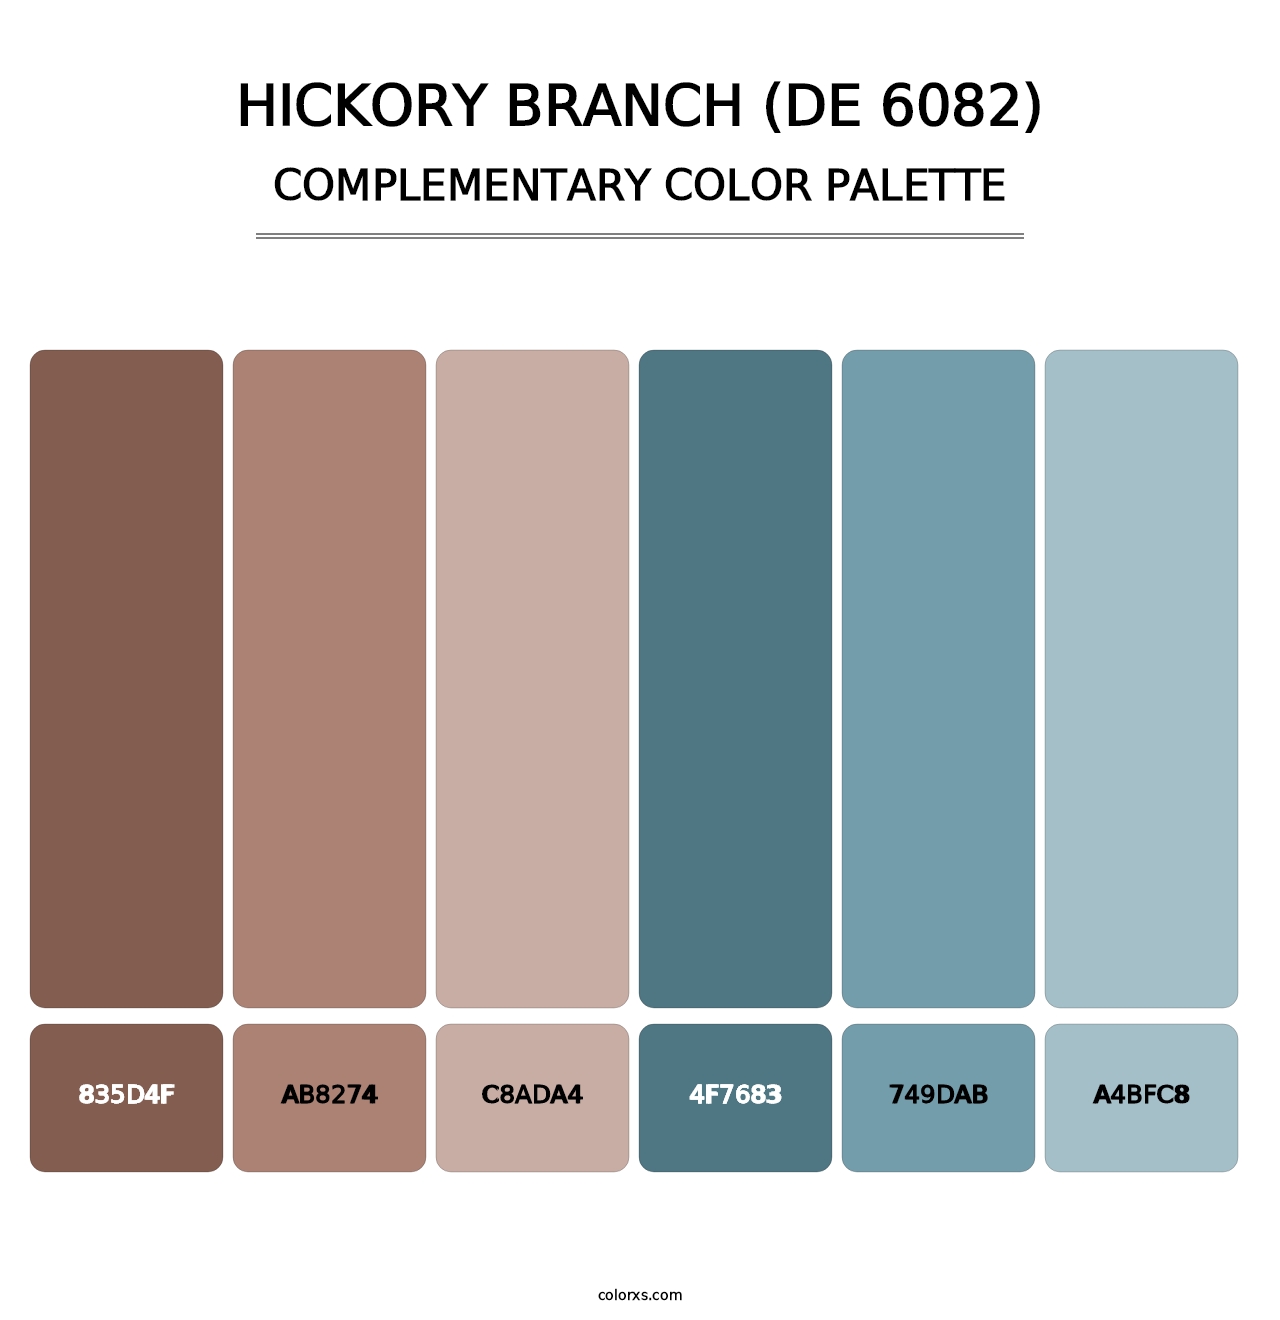 Hickory Branch (DE 6082) - Complementary Color Palette